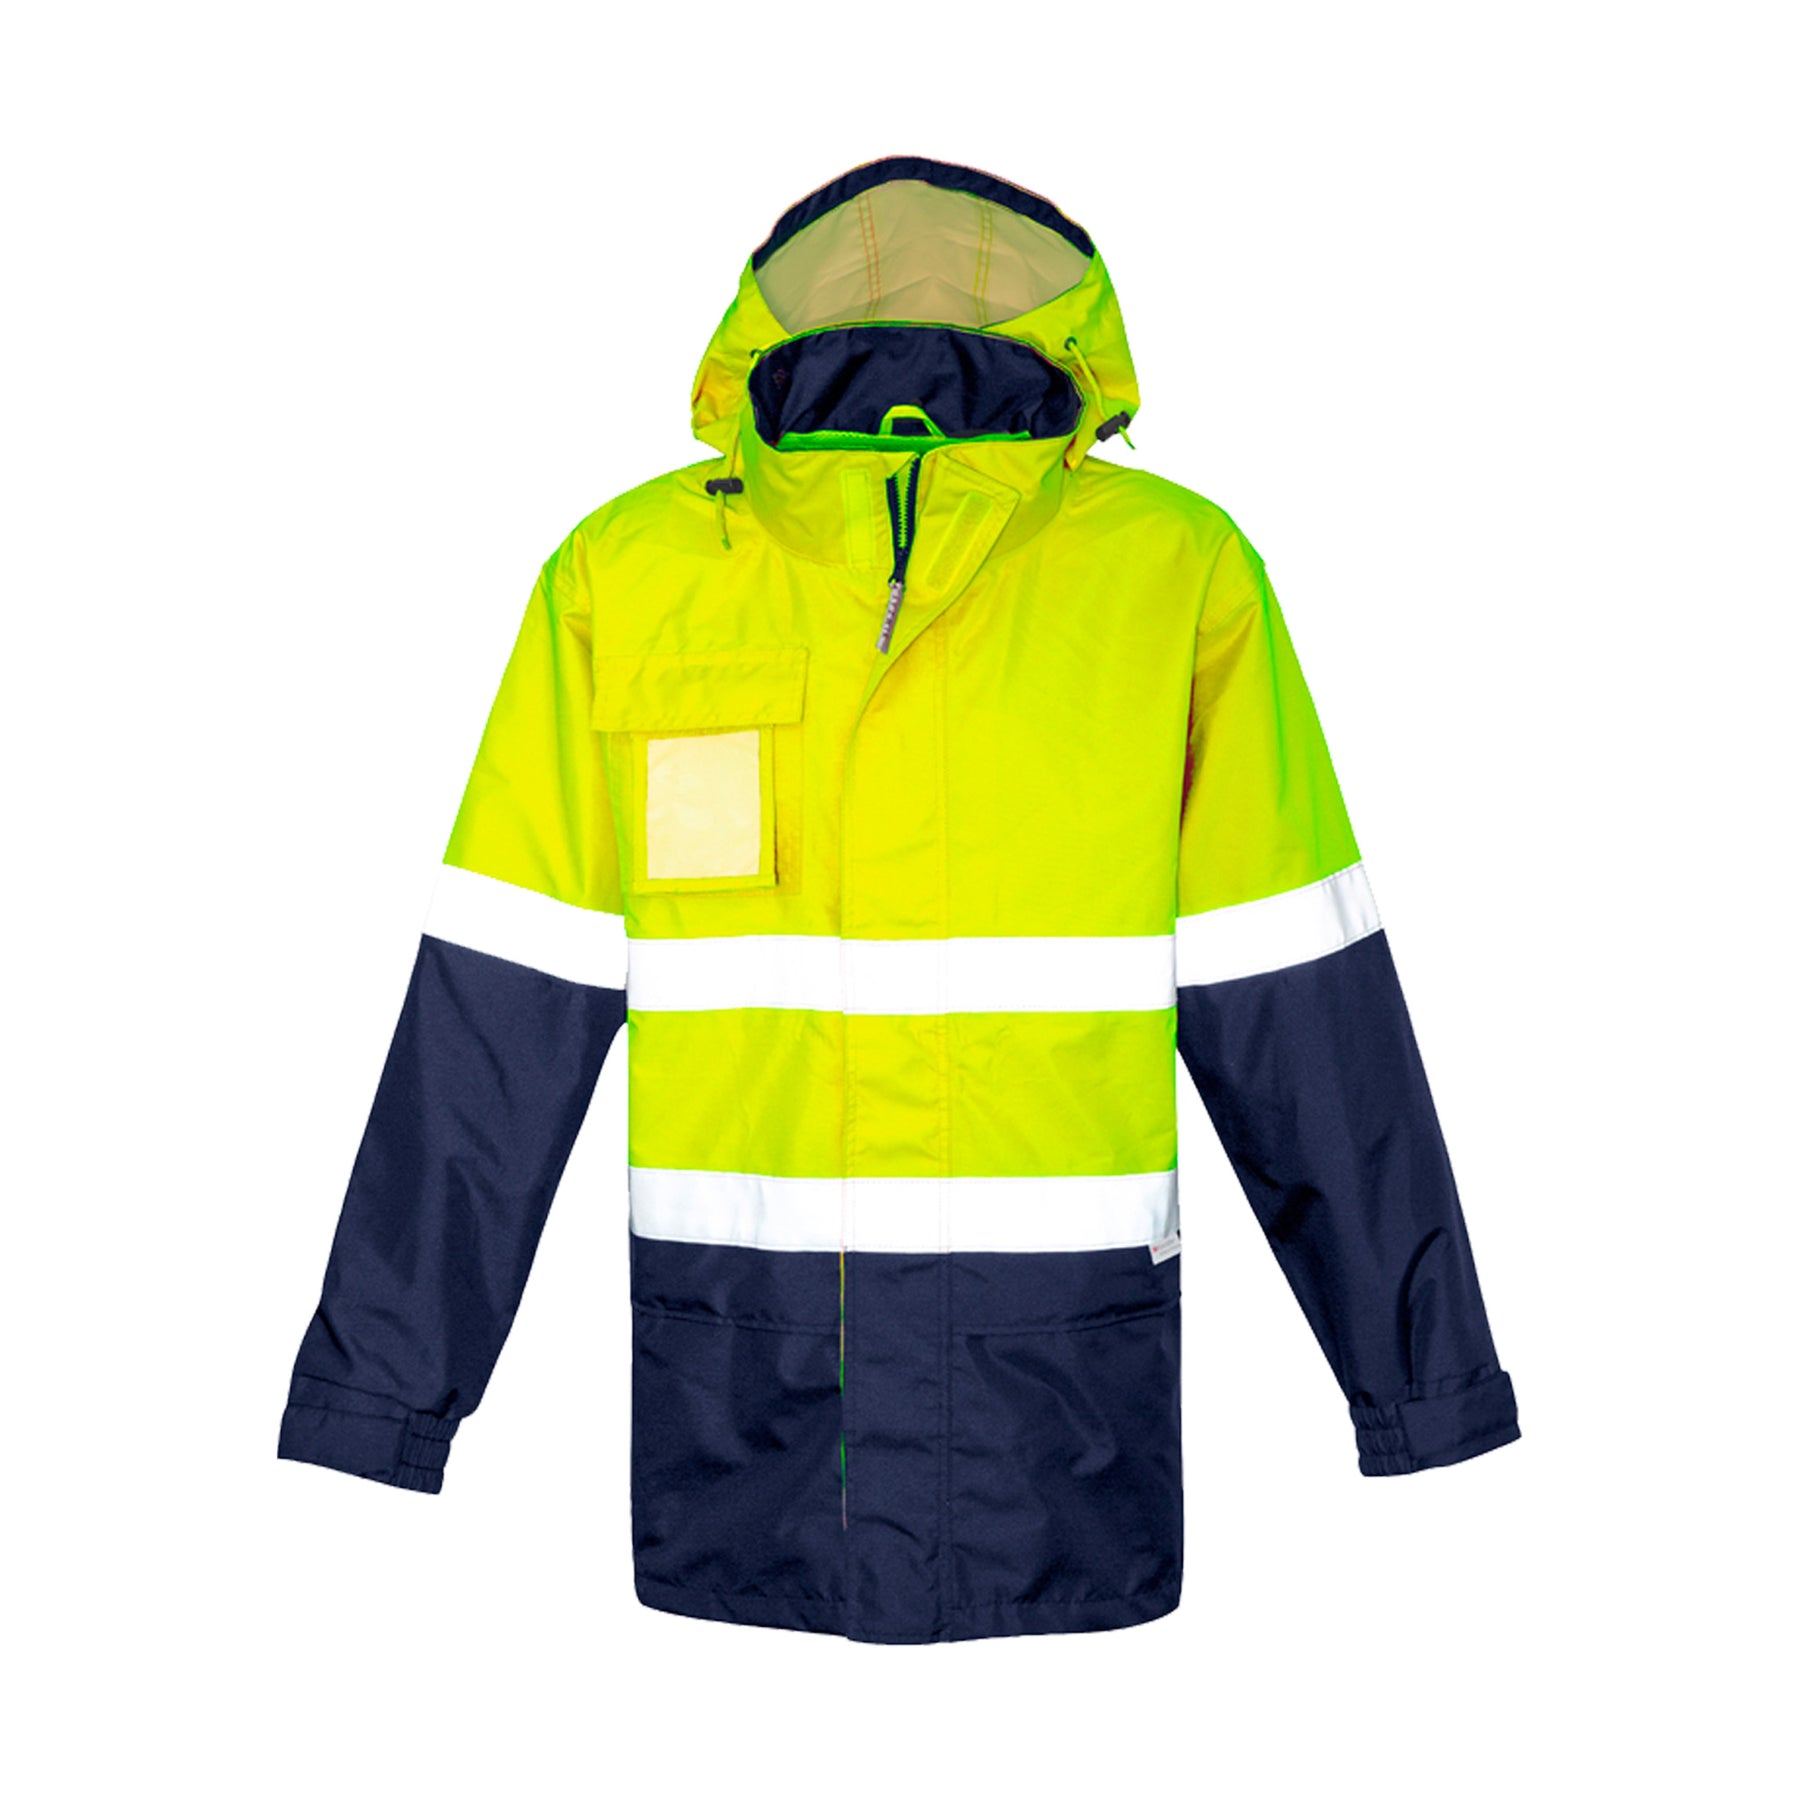 syzmik ultralite waterproof jacket with hood in yellow navy